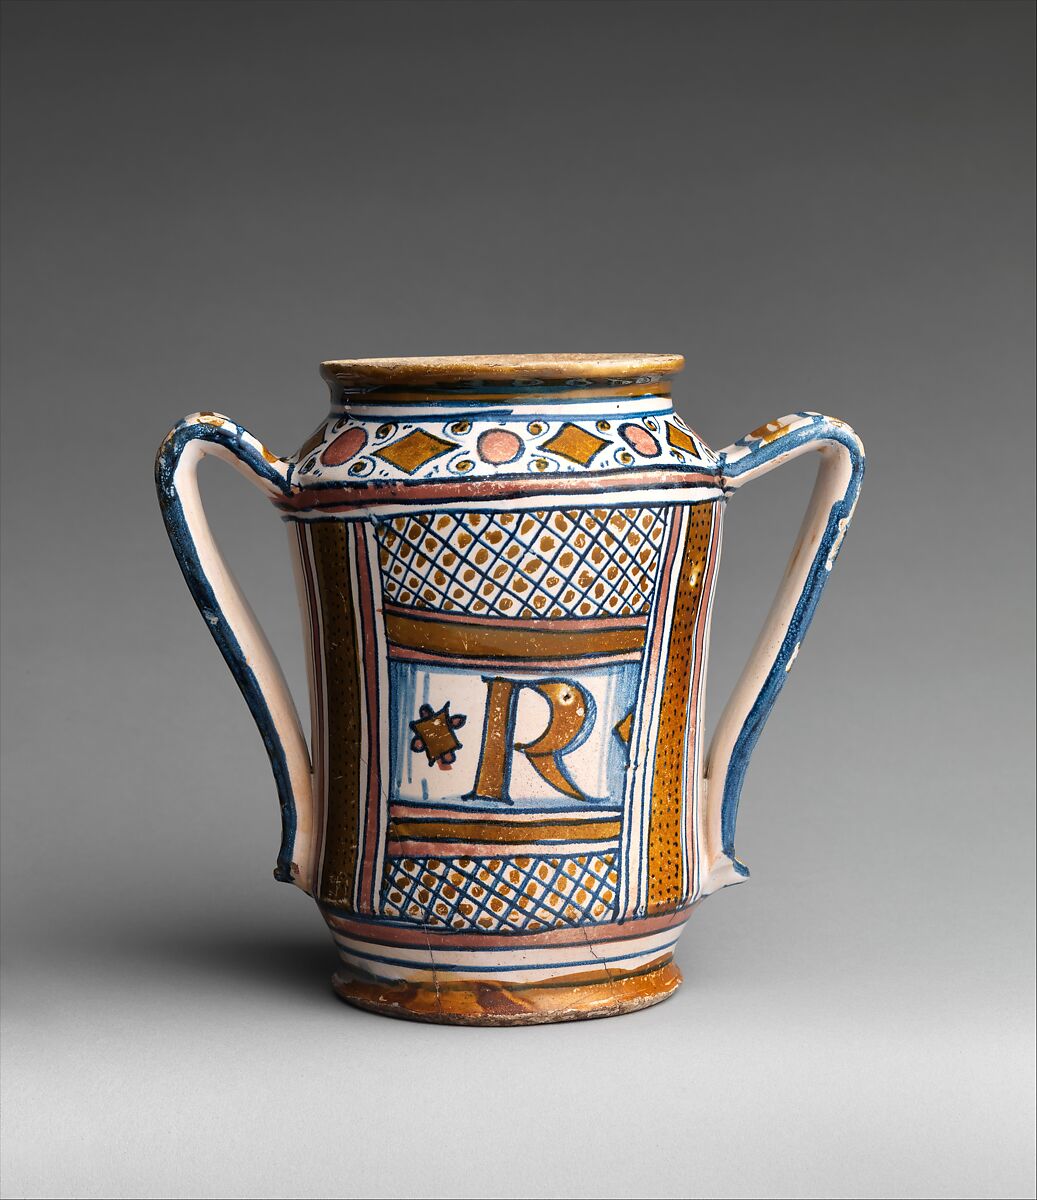 Two-handled vase, Maiolica (tin-glazed earthenware), lustered, Italian, probably Gubbio 